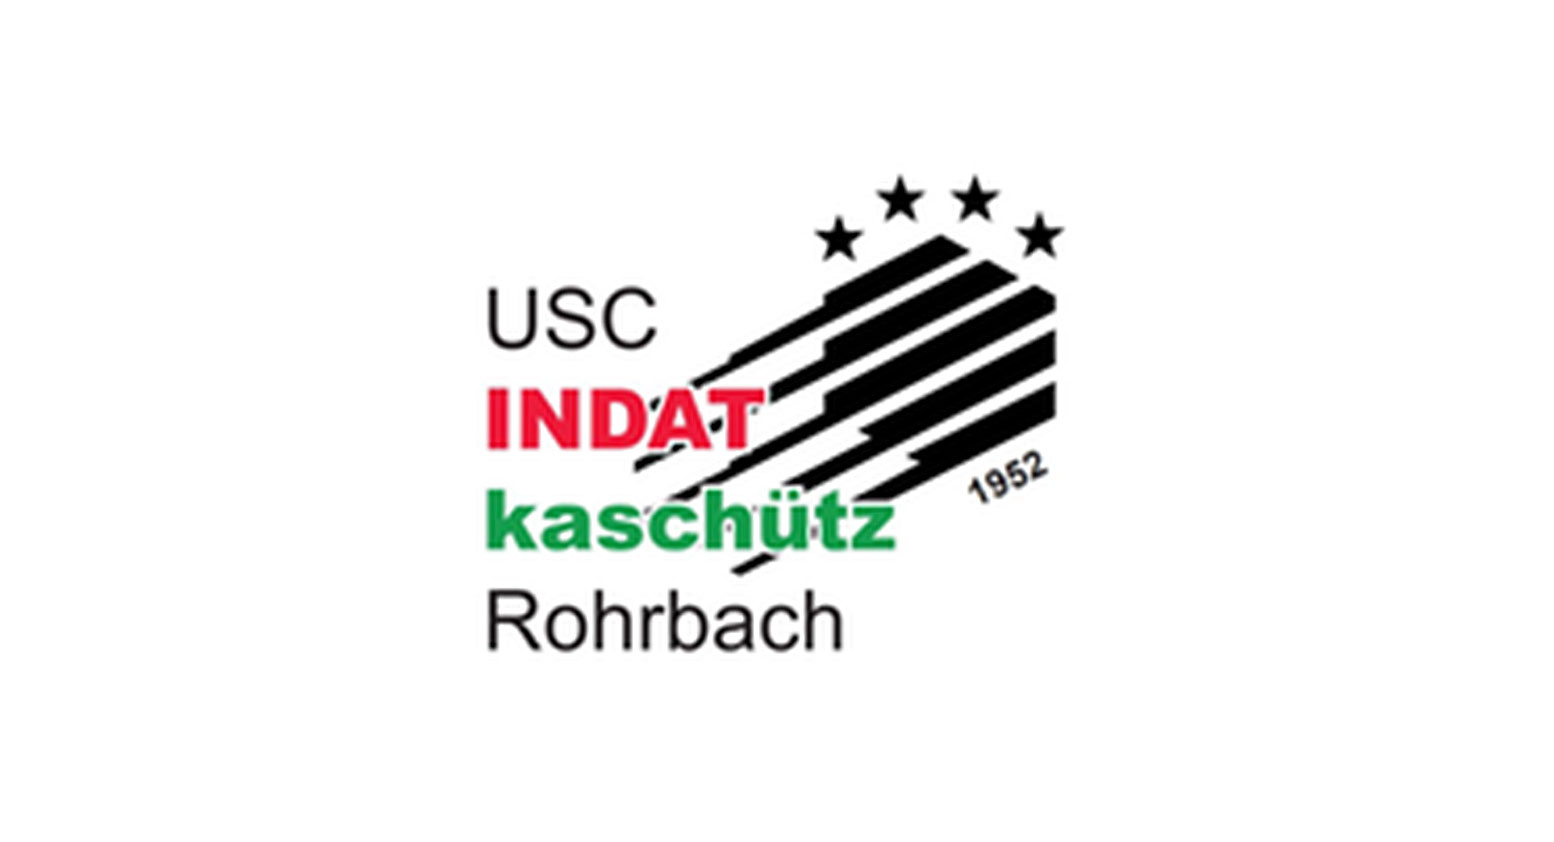 USC INDAT Rohrbach